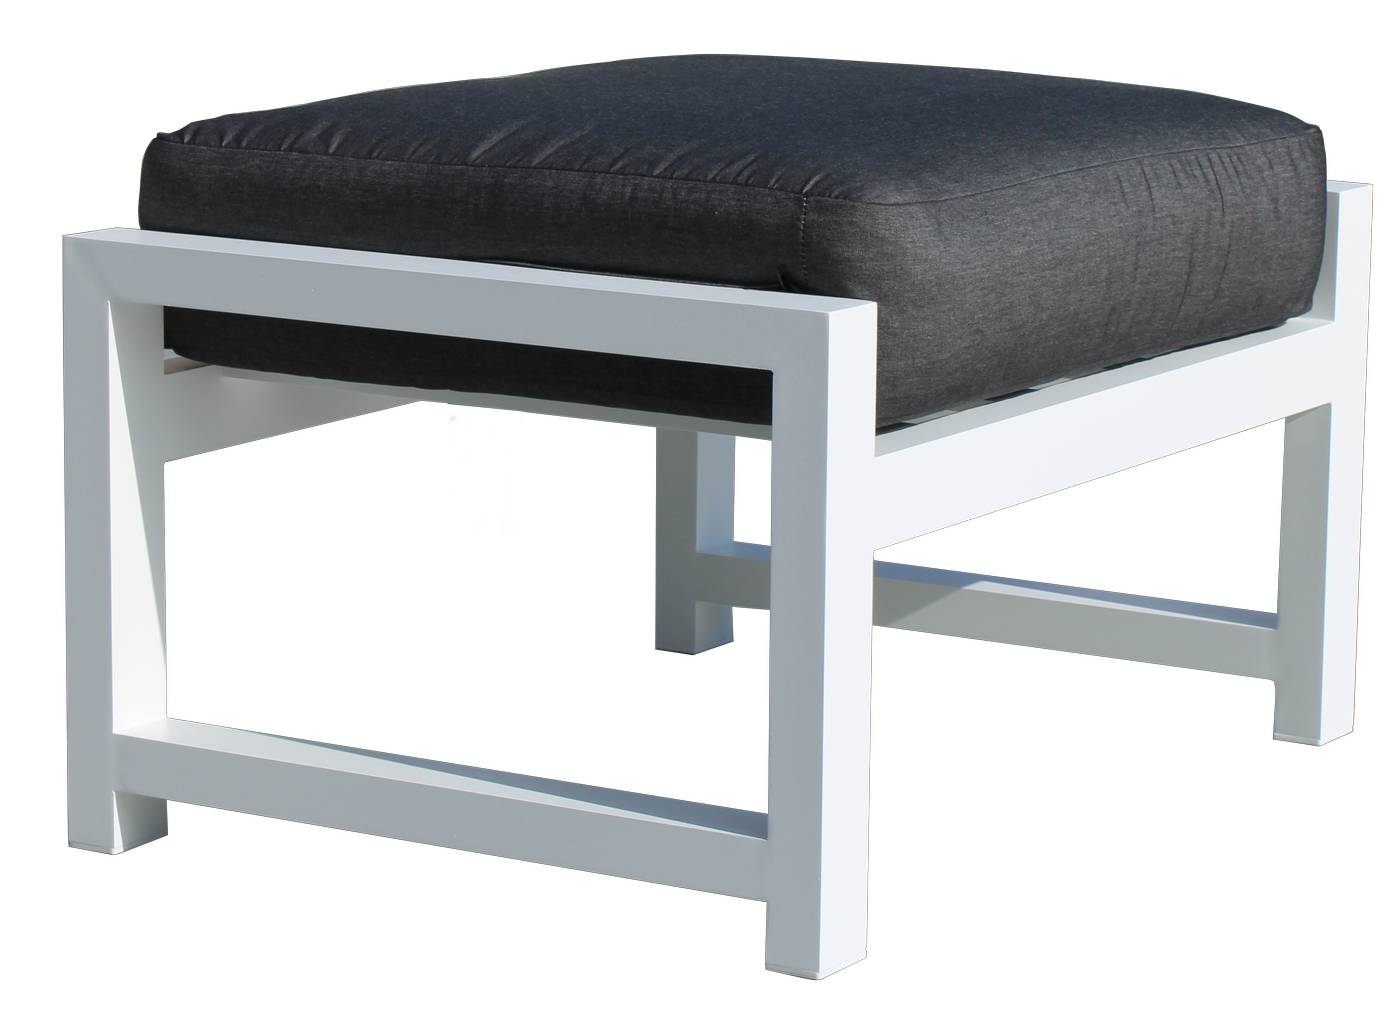 Set Aluminio Arouva-10 - Conjunto aluminio con cojines extra confort: sofá de 3 plazas + 2 sillones + 1 mesa de centro + 2 reposapiés. Colores: blanco, antracita, marrón, champagne o plata.